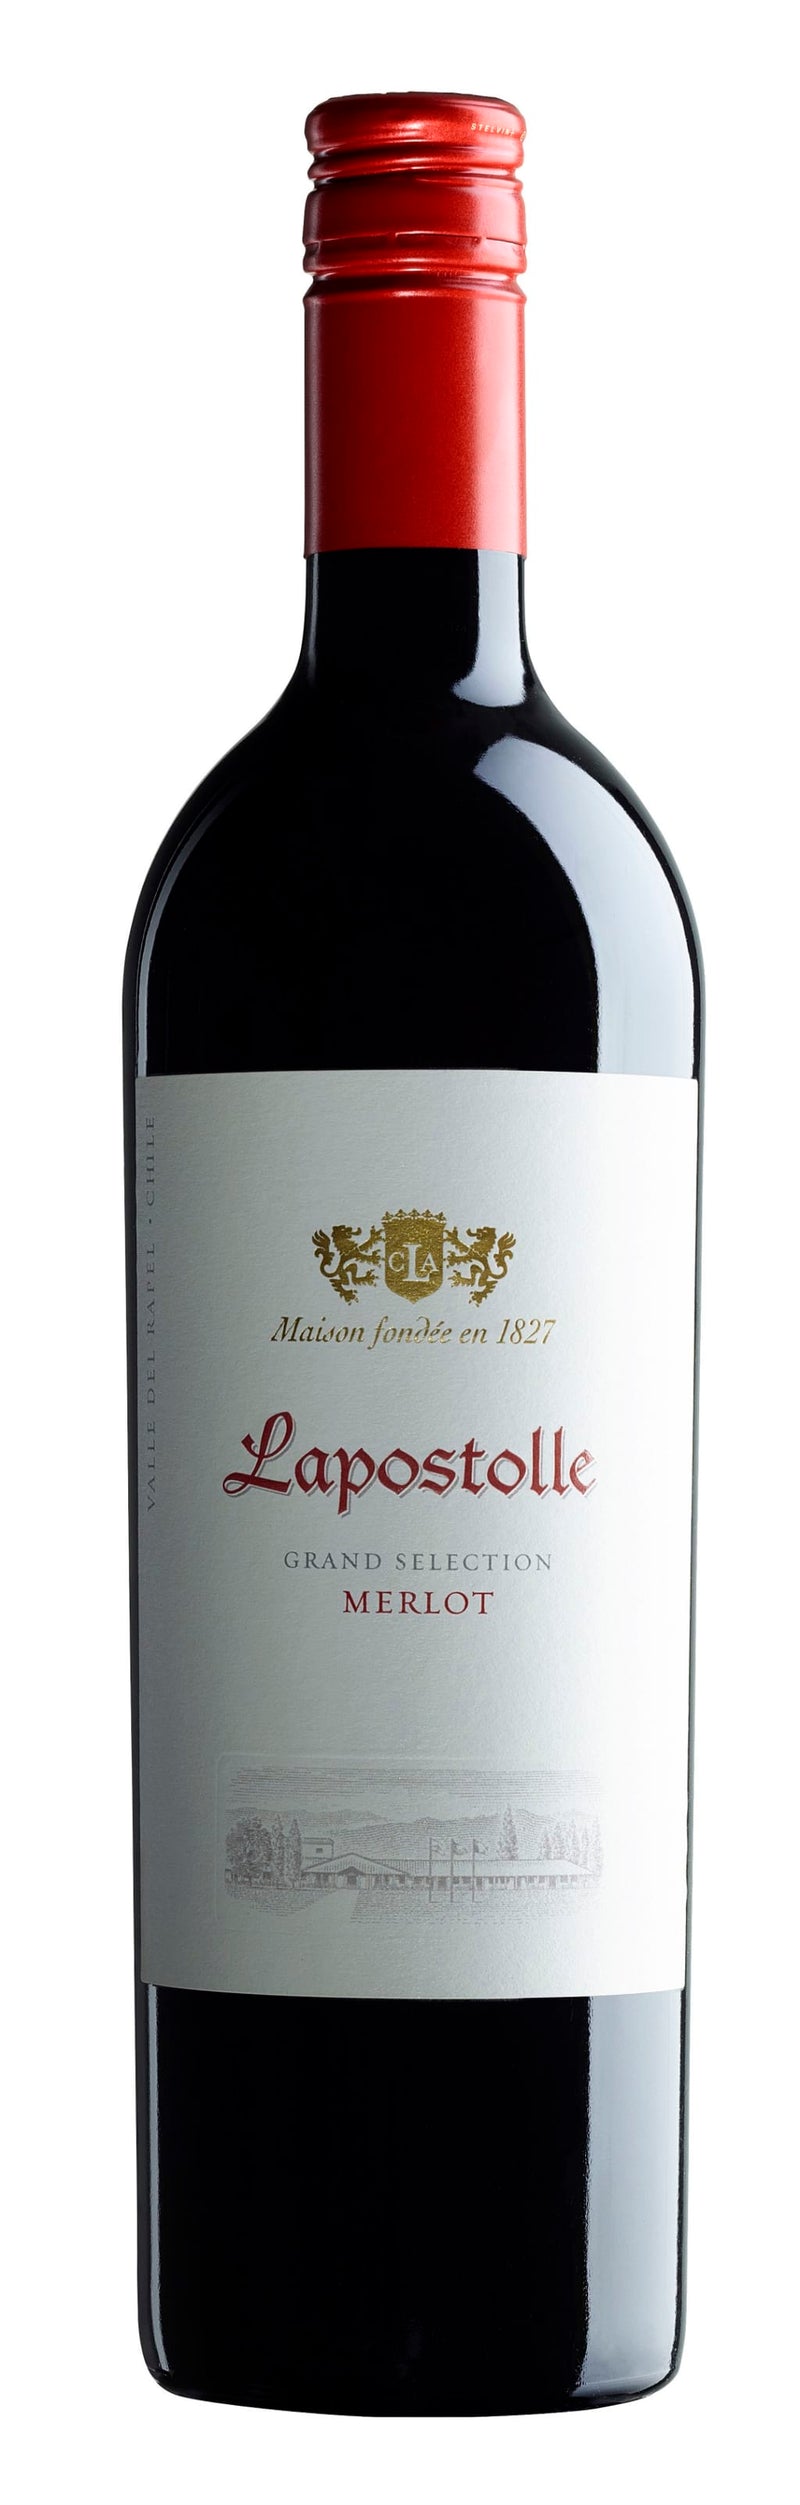 Casa Lapostolle Merlot Grand Selection